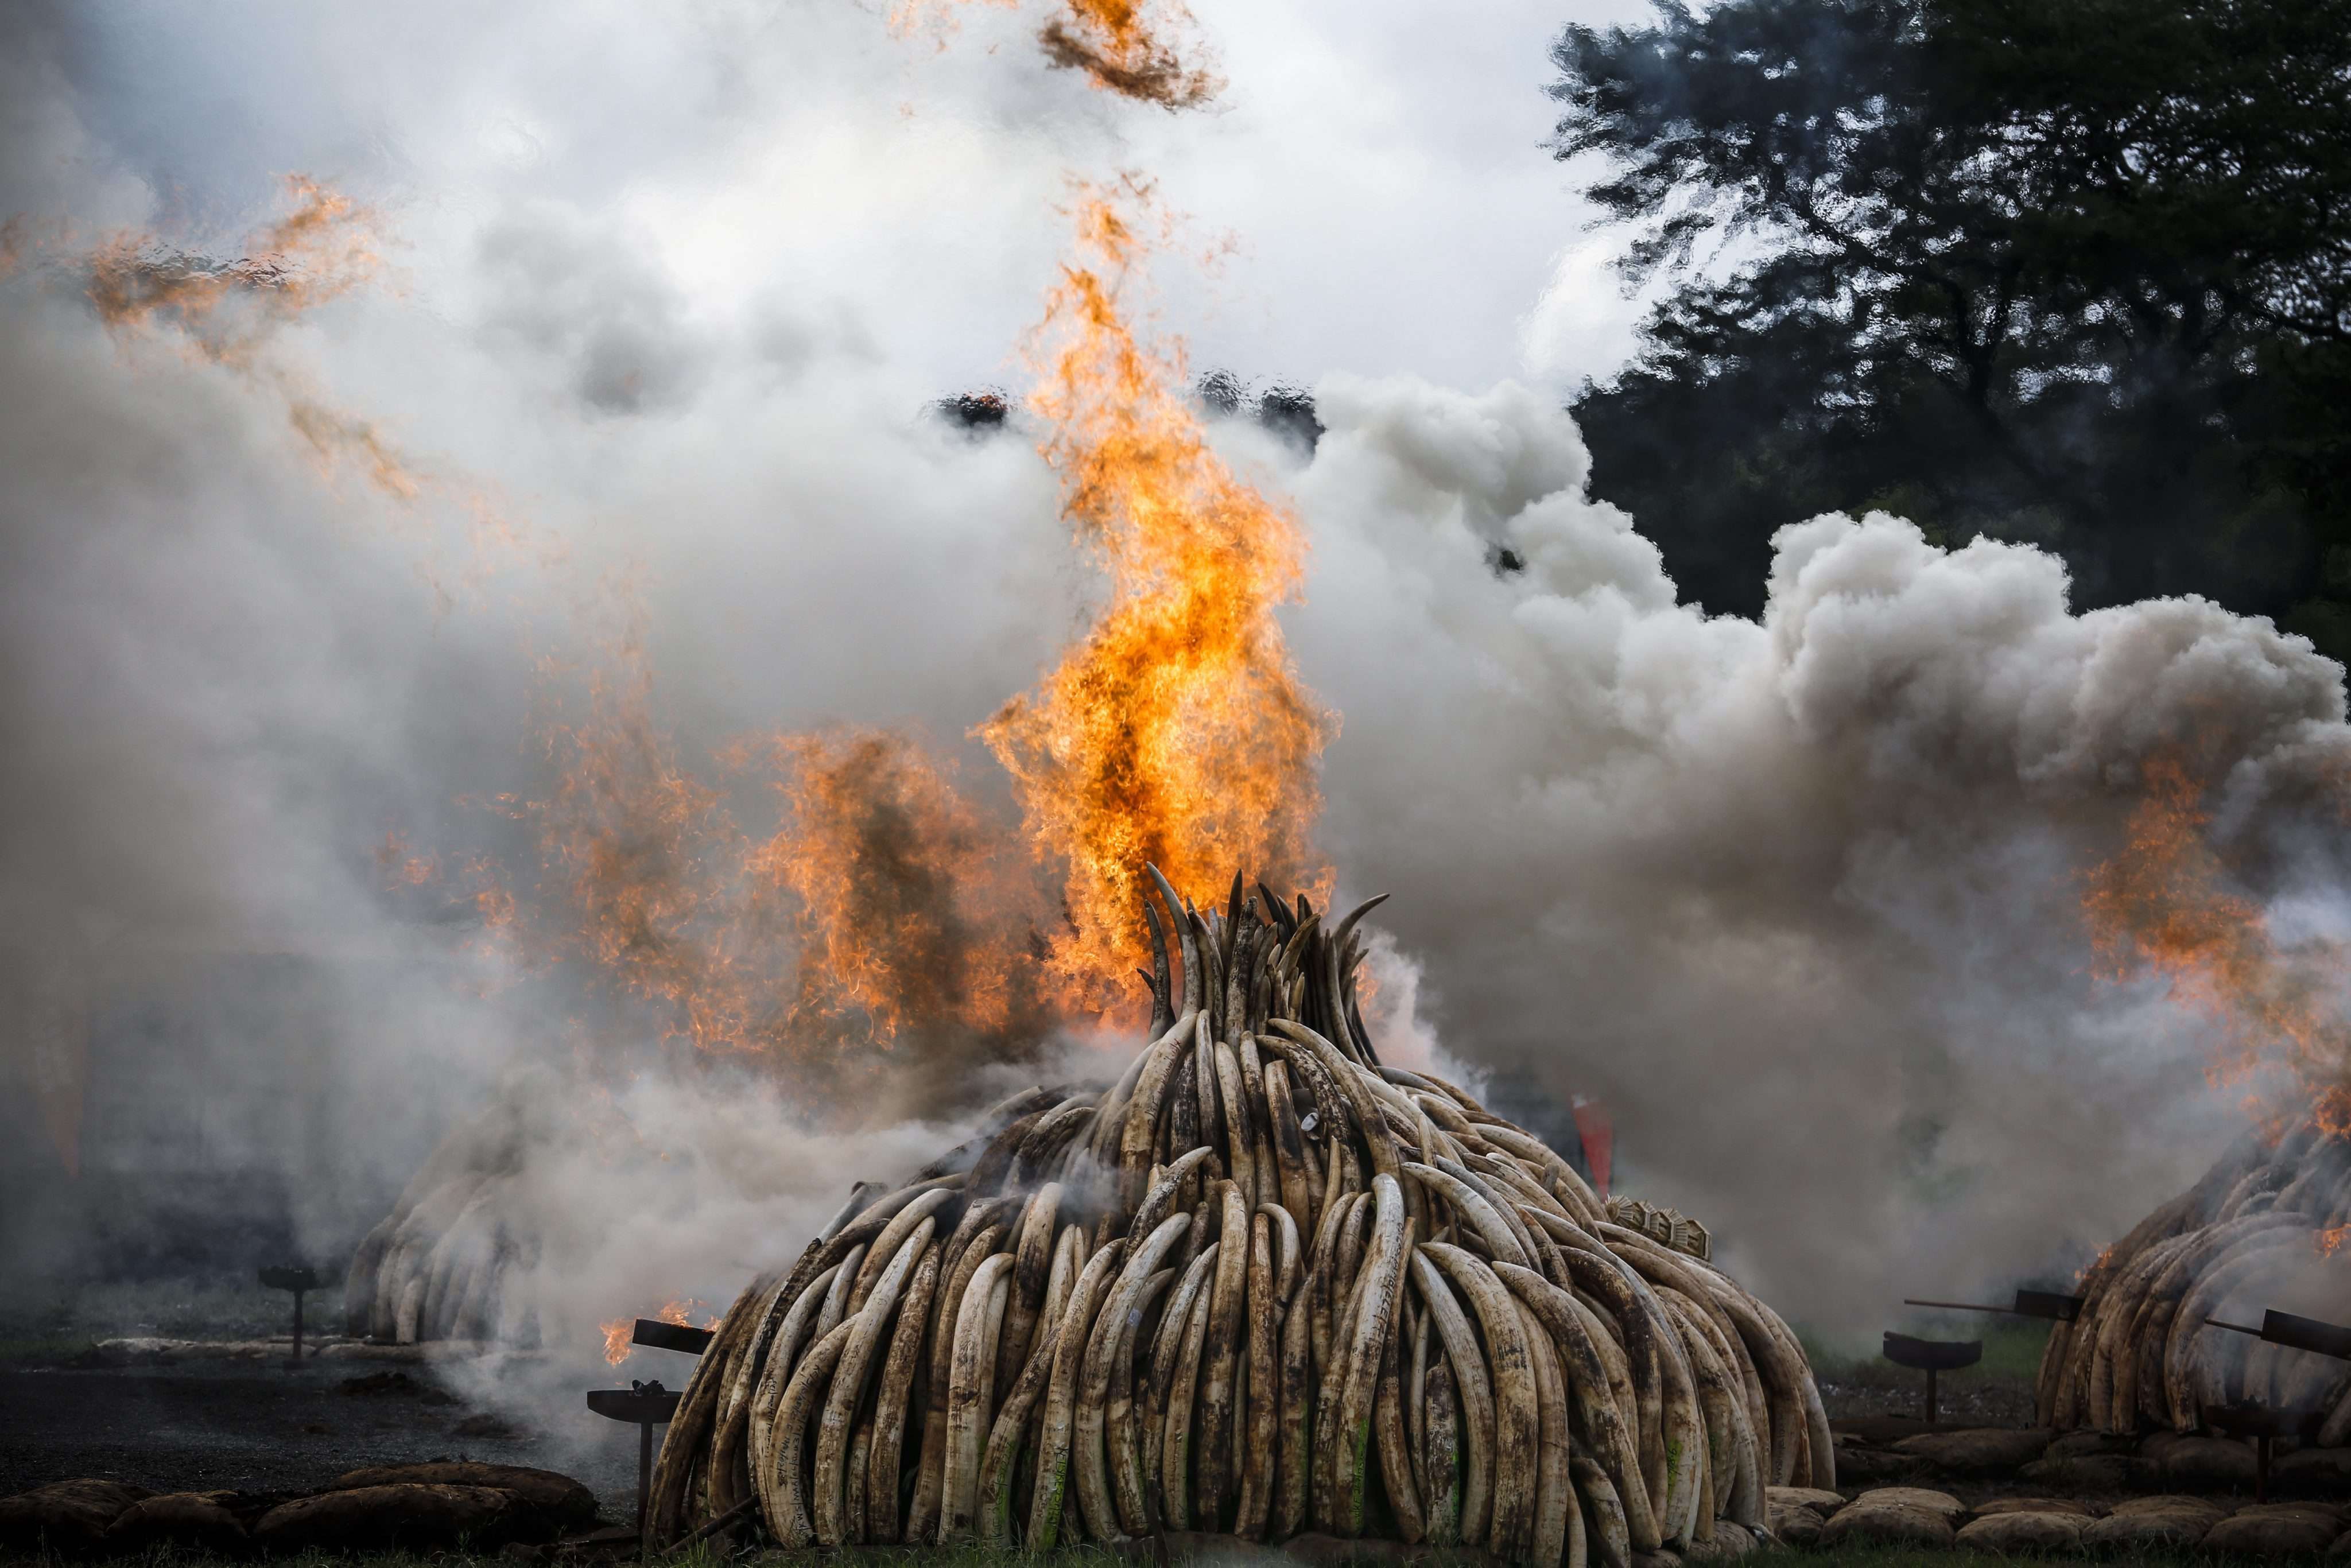 A pile of elephant tusks burns in the Nairobi National Park, Kenya, on April 30. Photo: EPA